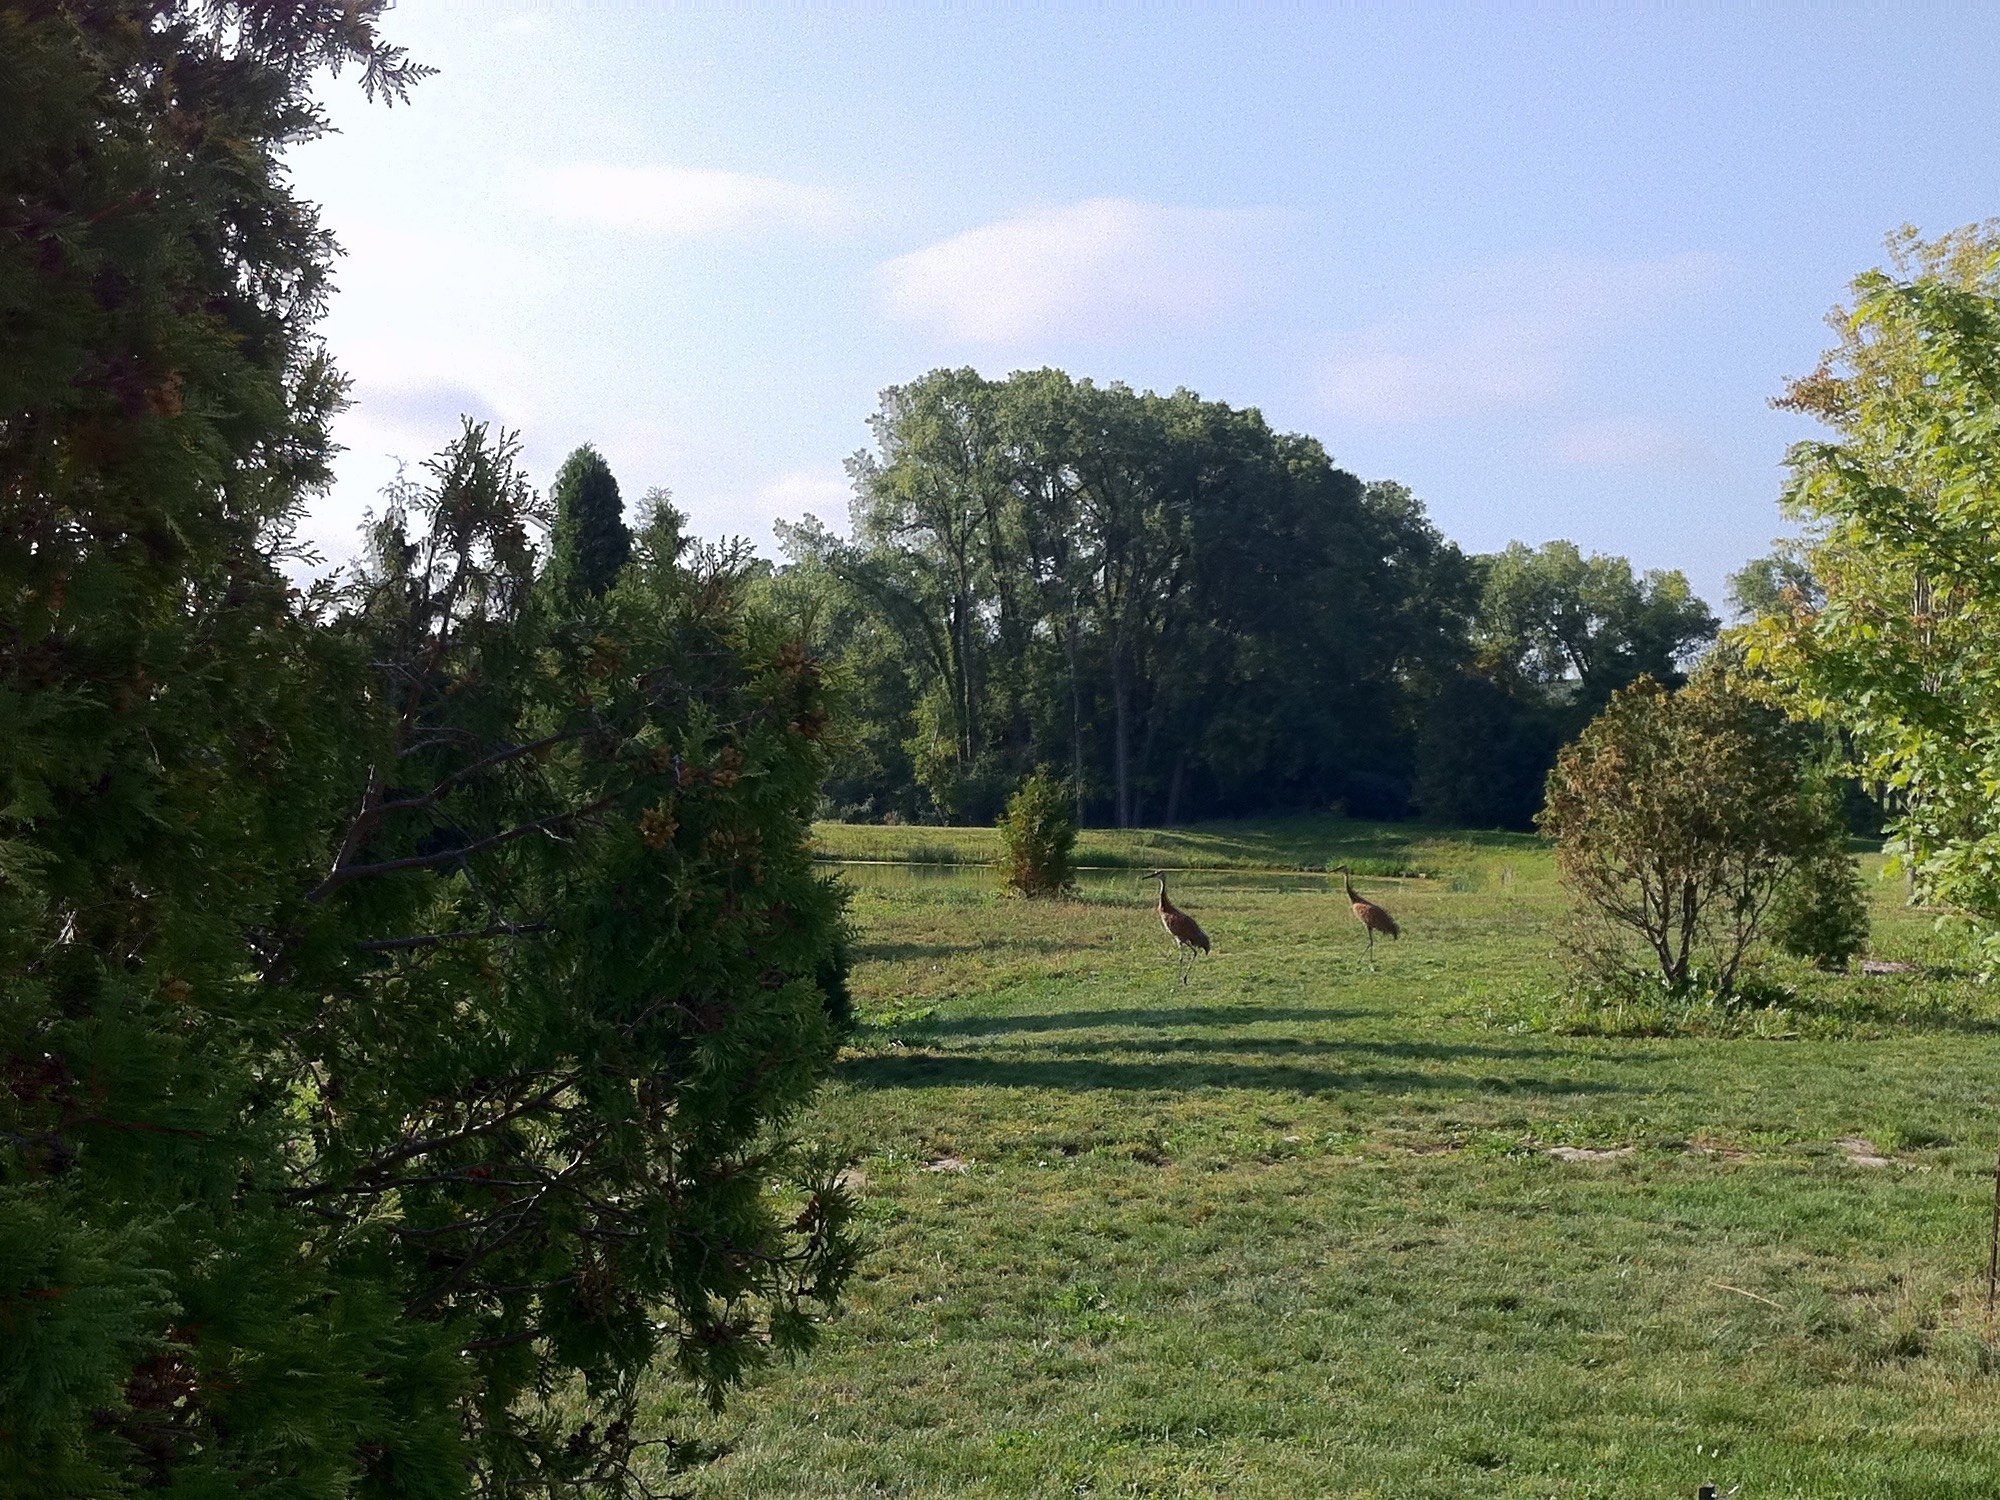 Sandhill Cranes in Stevens Pond area in Madison, Wisconsin on September 2, 2012.